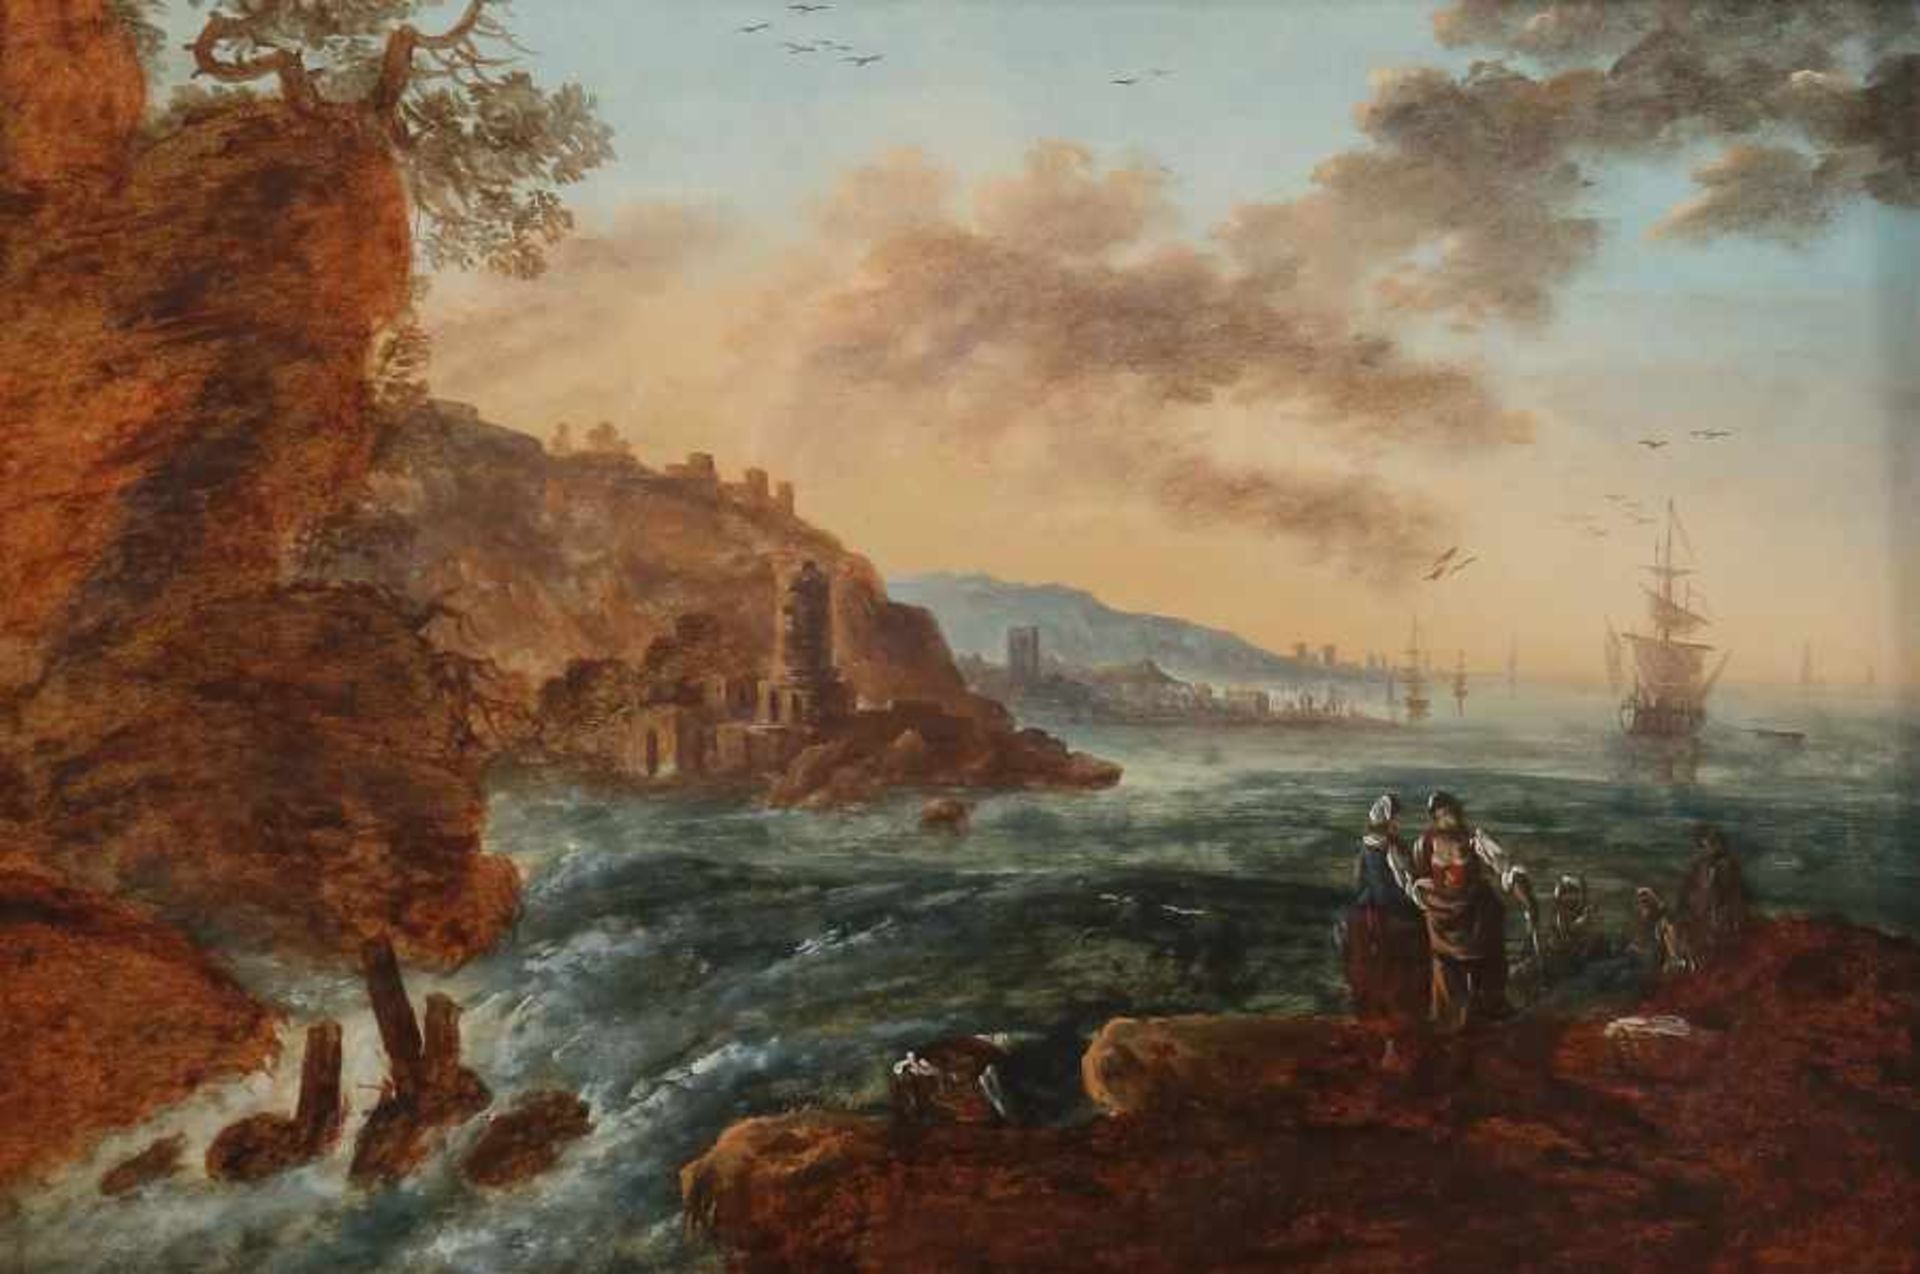 Vernet, Joseph Claude (Schule/Umkreis)Avignon 1714 - 1789 Paris, Landschafts- und Marinemaler. "